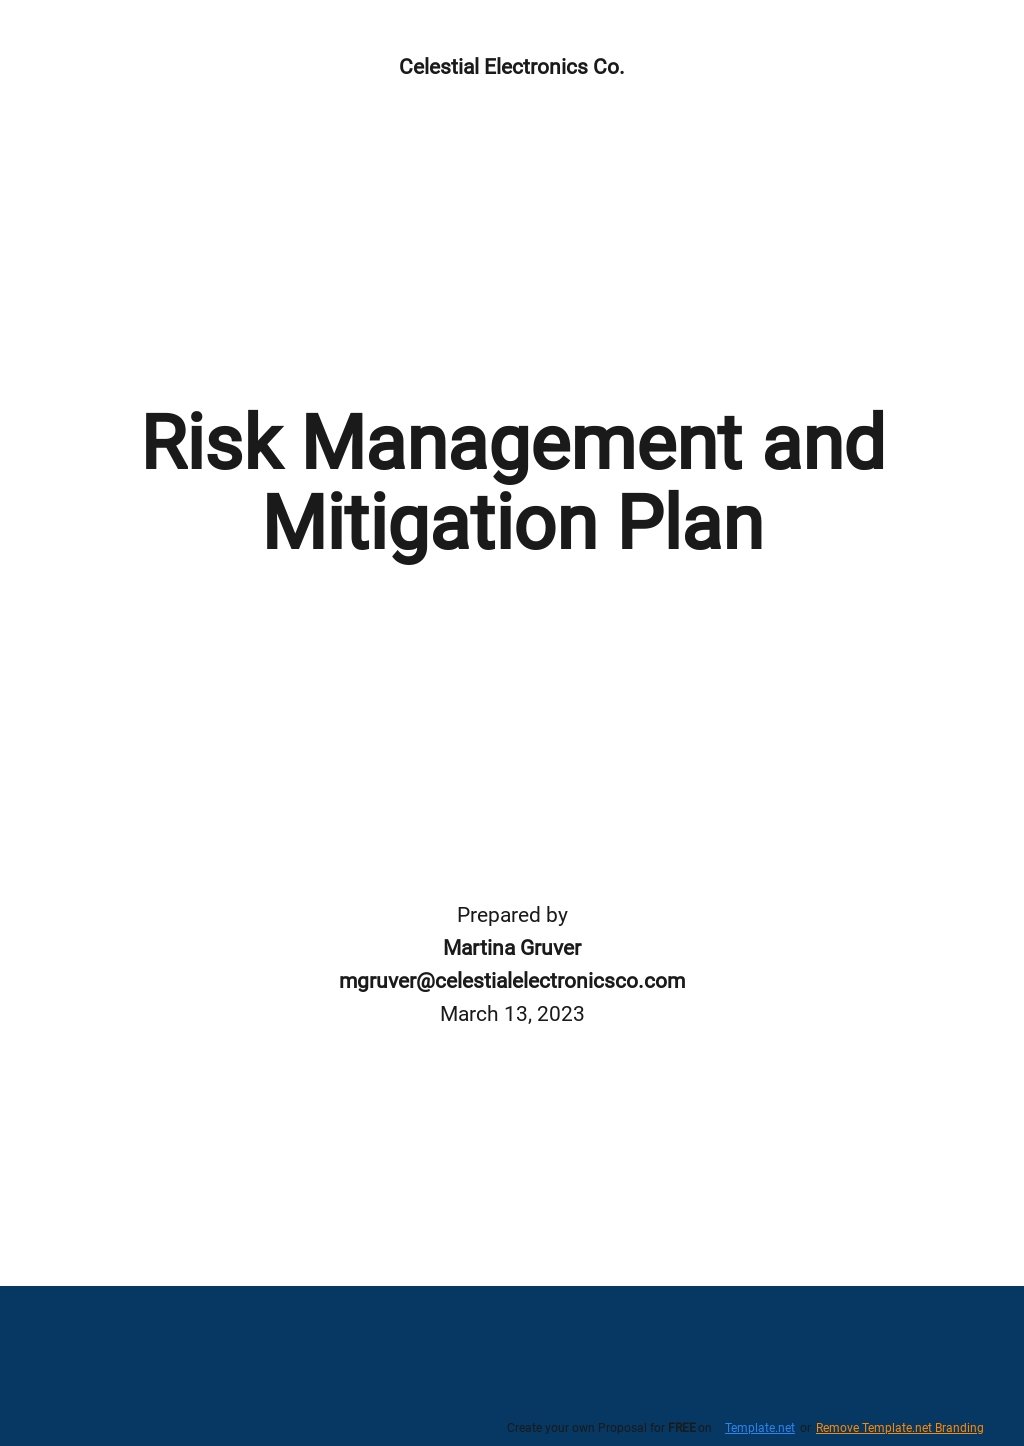 Risk Management And Mitigation Plan Template.jpe